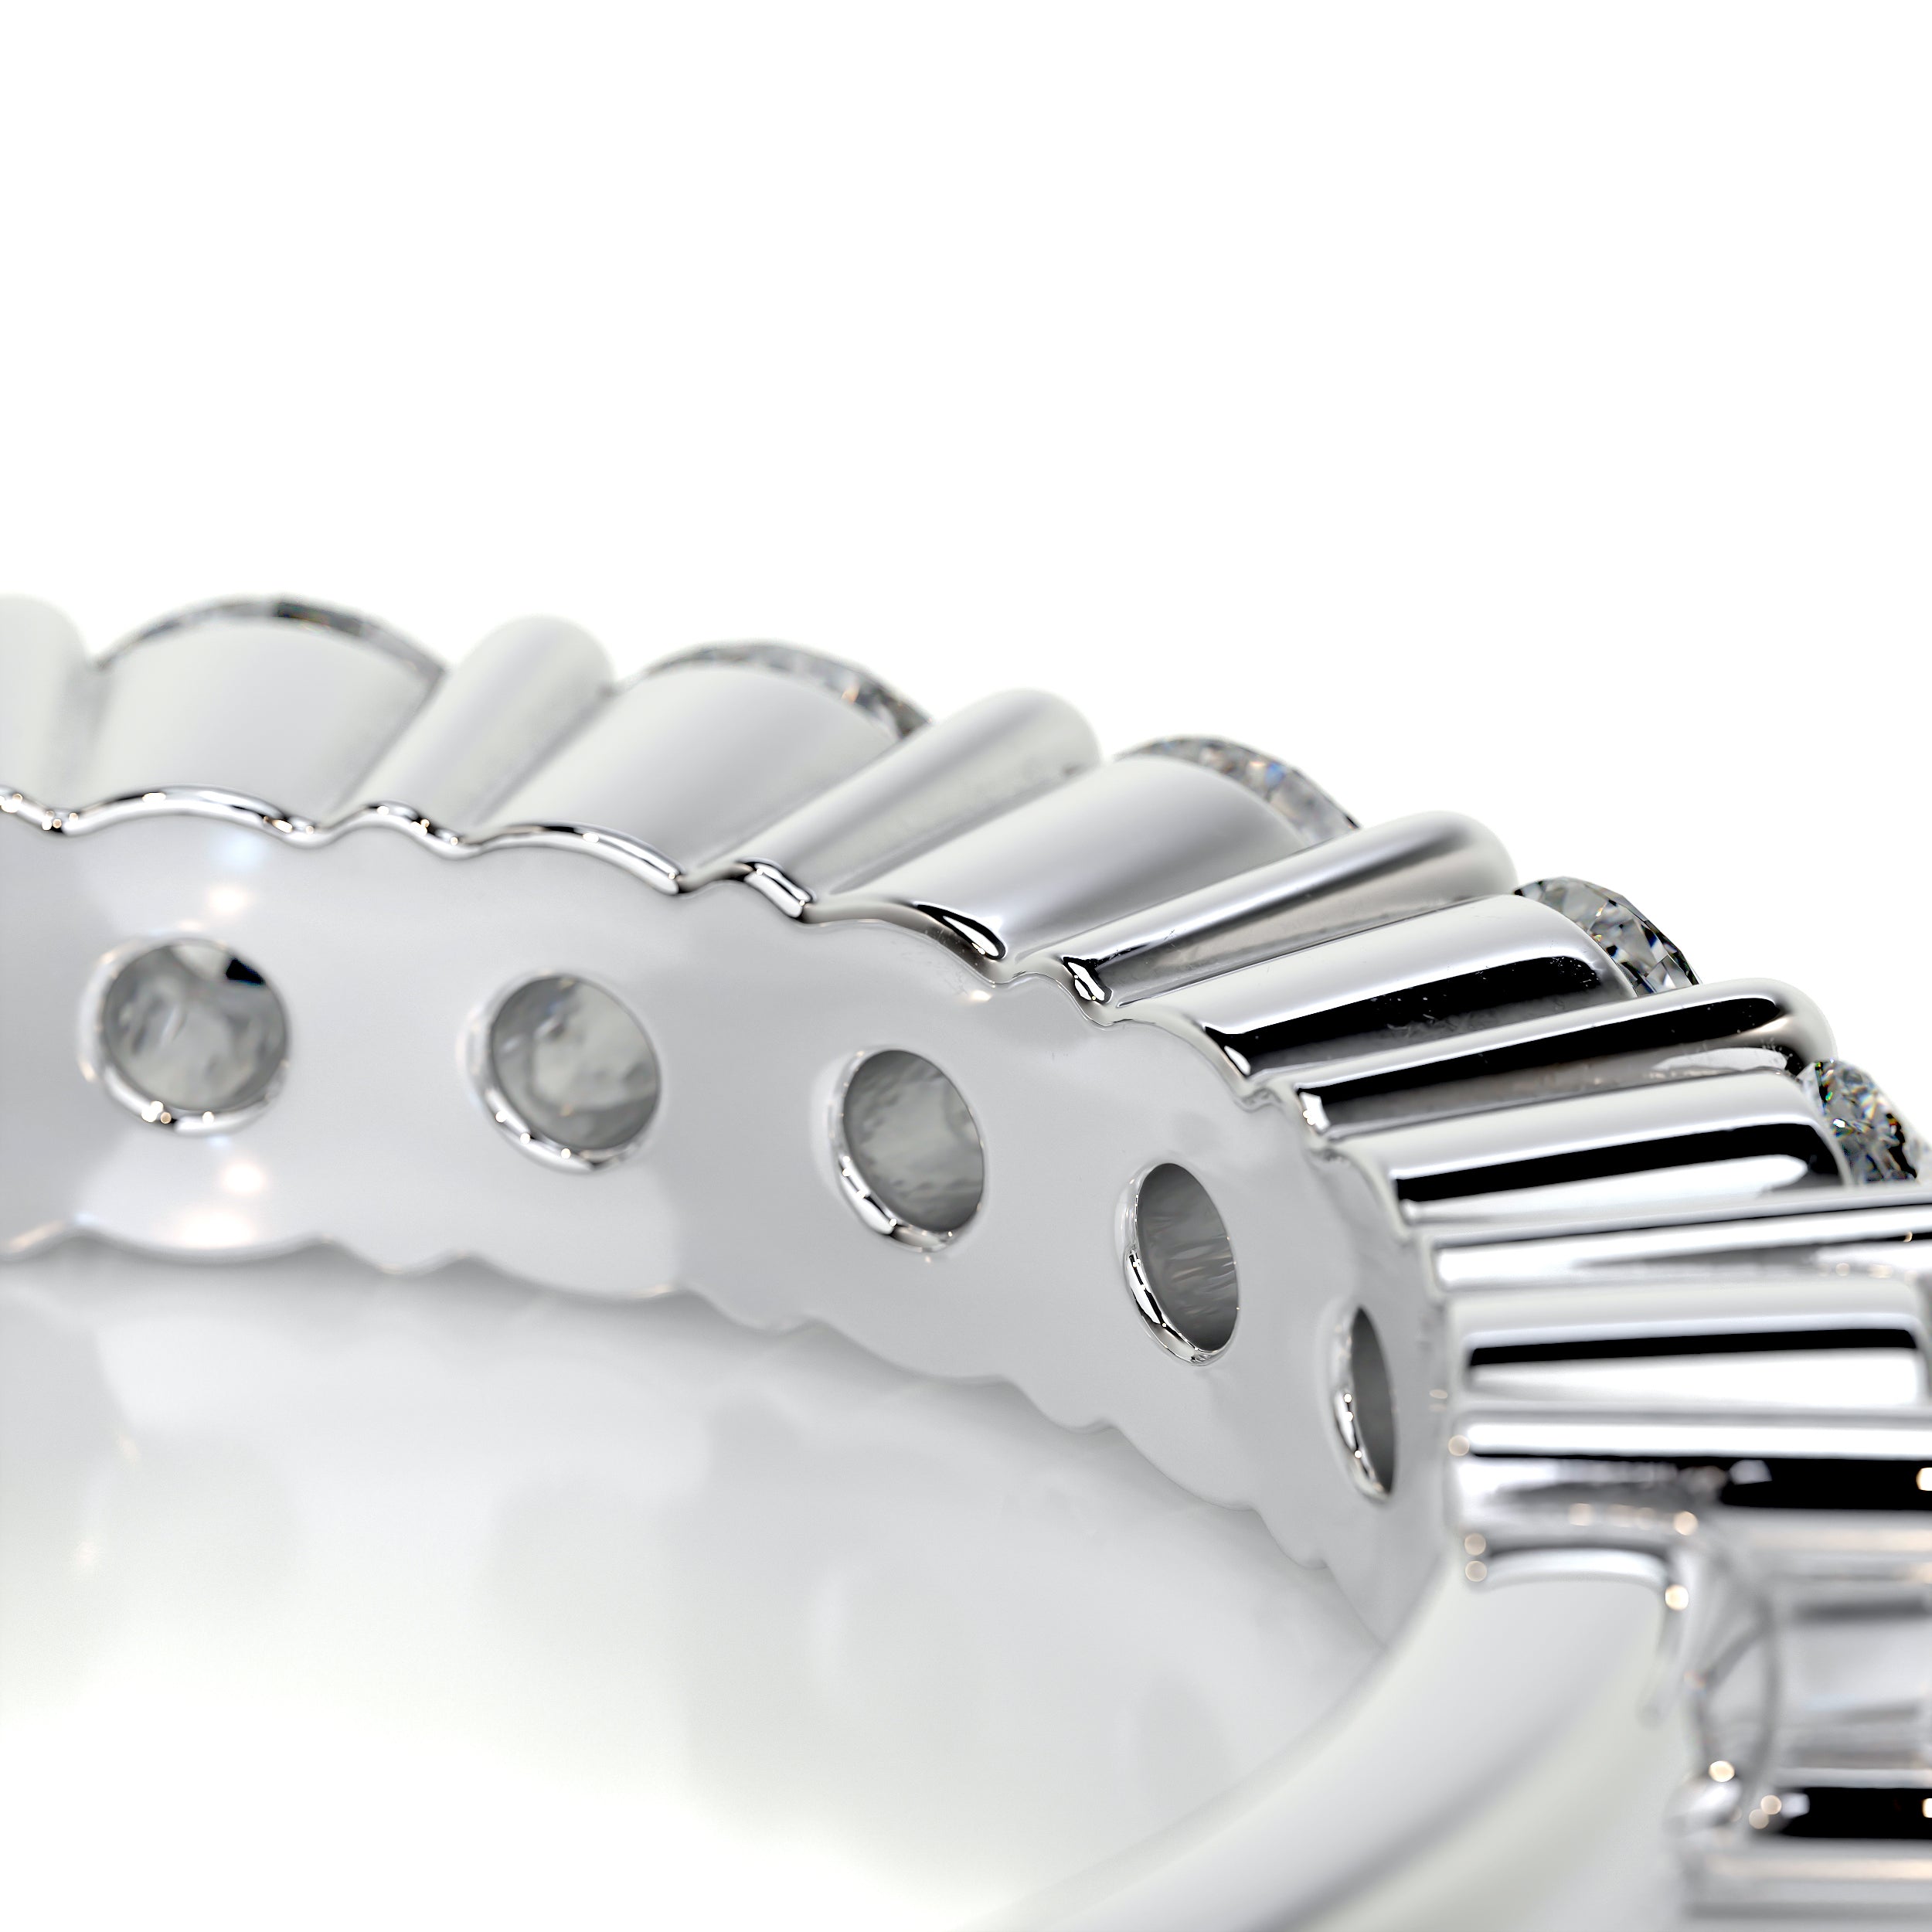 Catherine Diamond Wedding Ring   (0.75 Carat) -14K White Gold